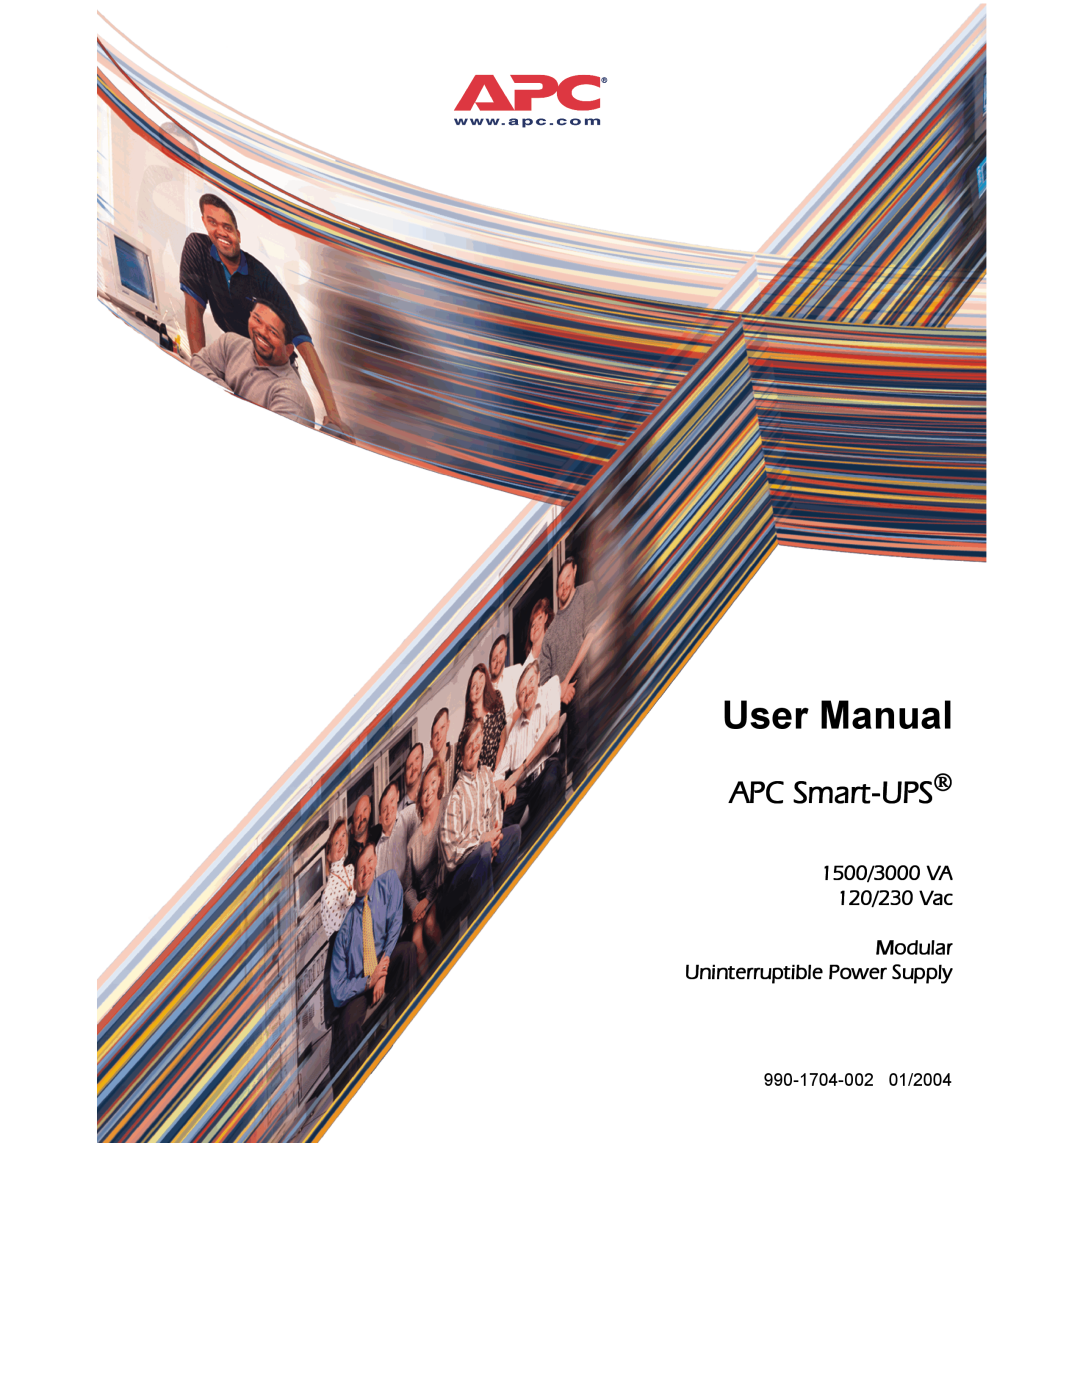 APC user manual User Manual, APC Smart-UPS , 1500/3000 VA 120/230 Vac, Modular Uninterruptible Power Supply 